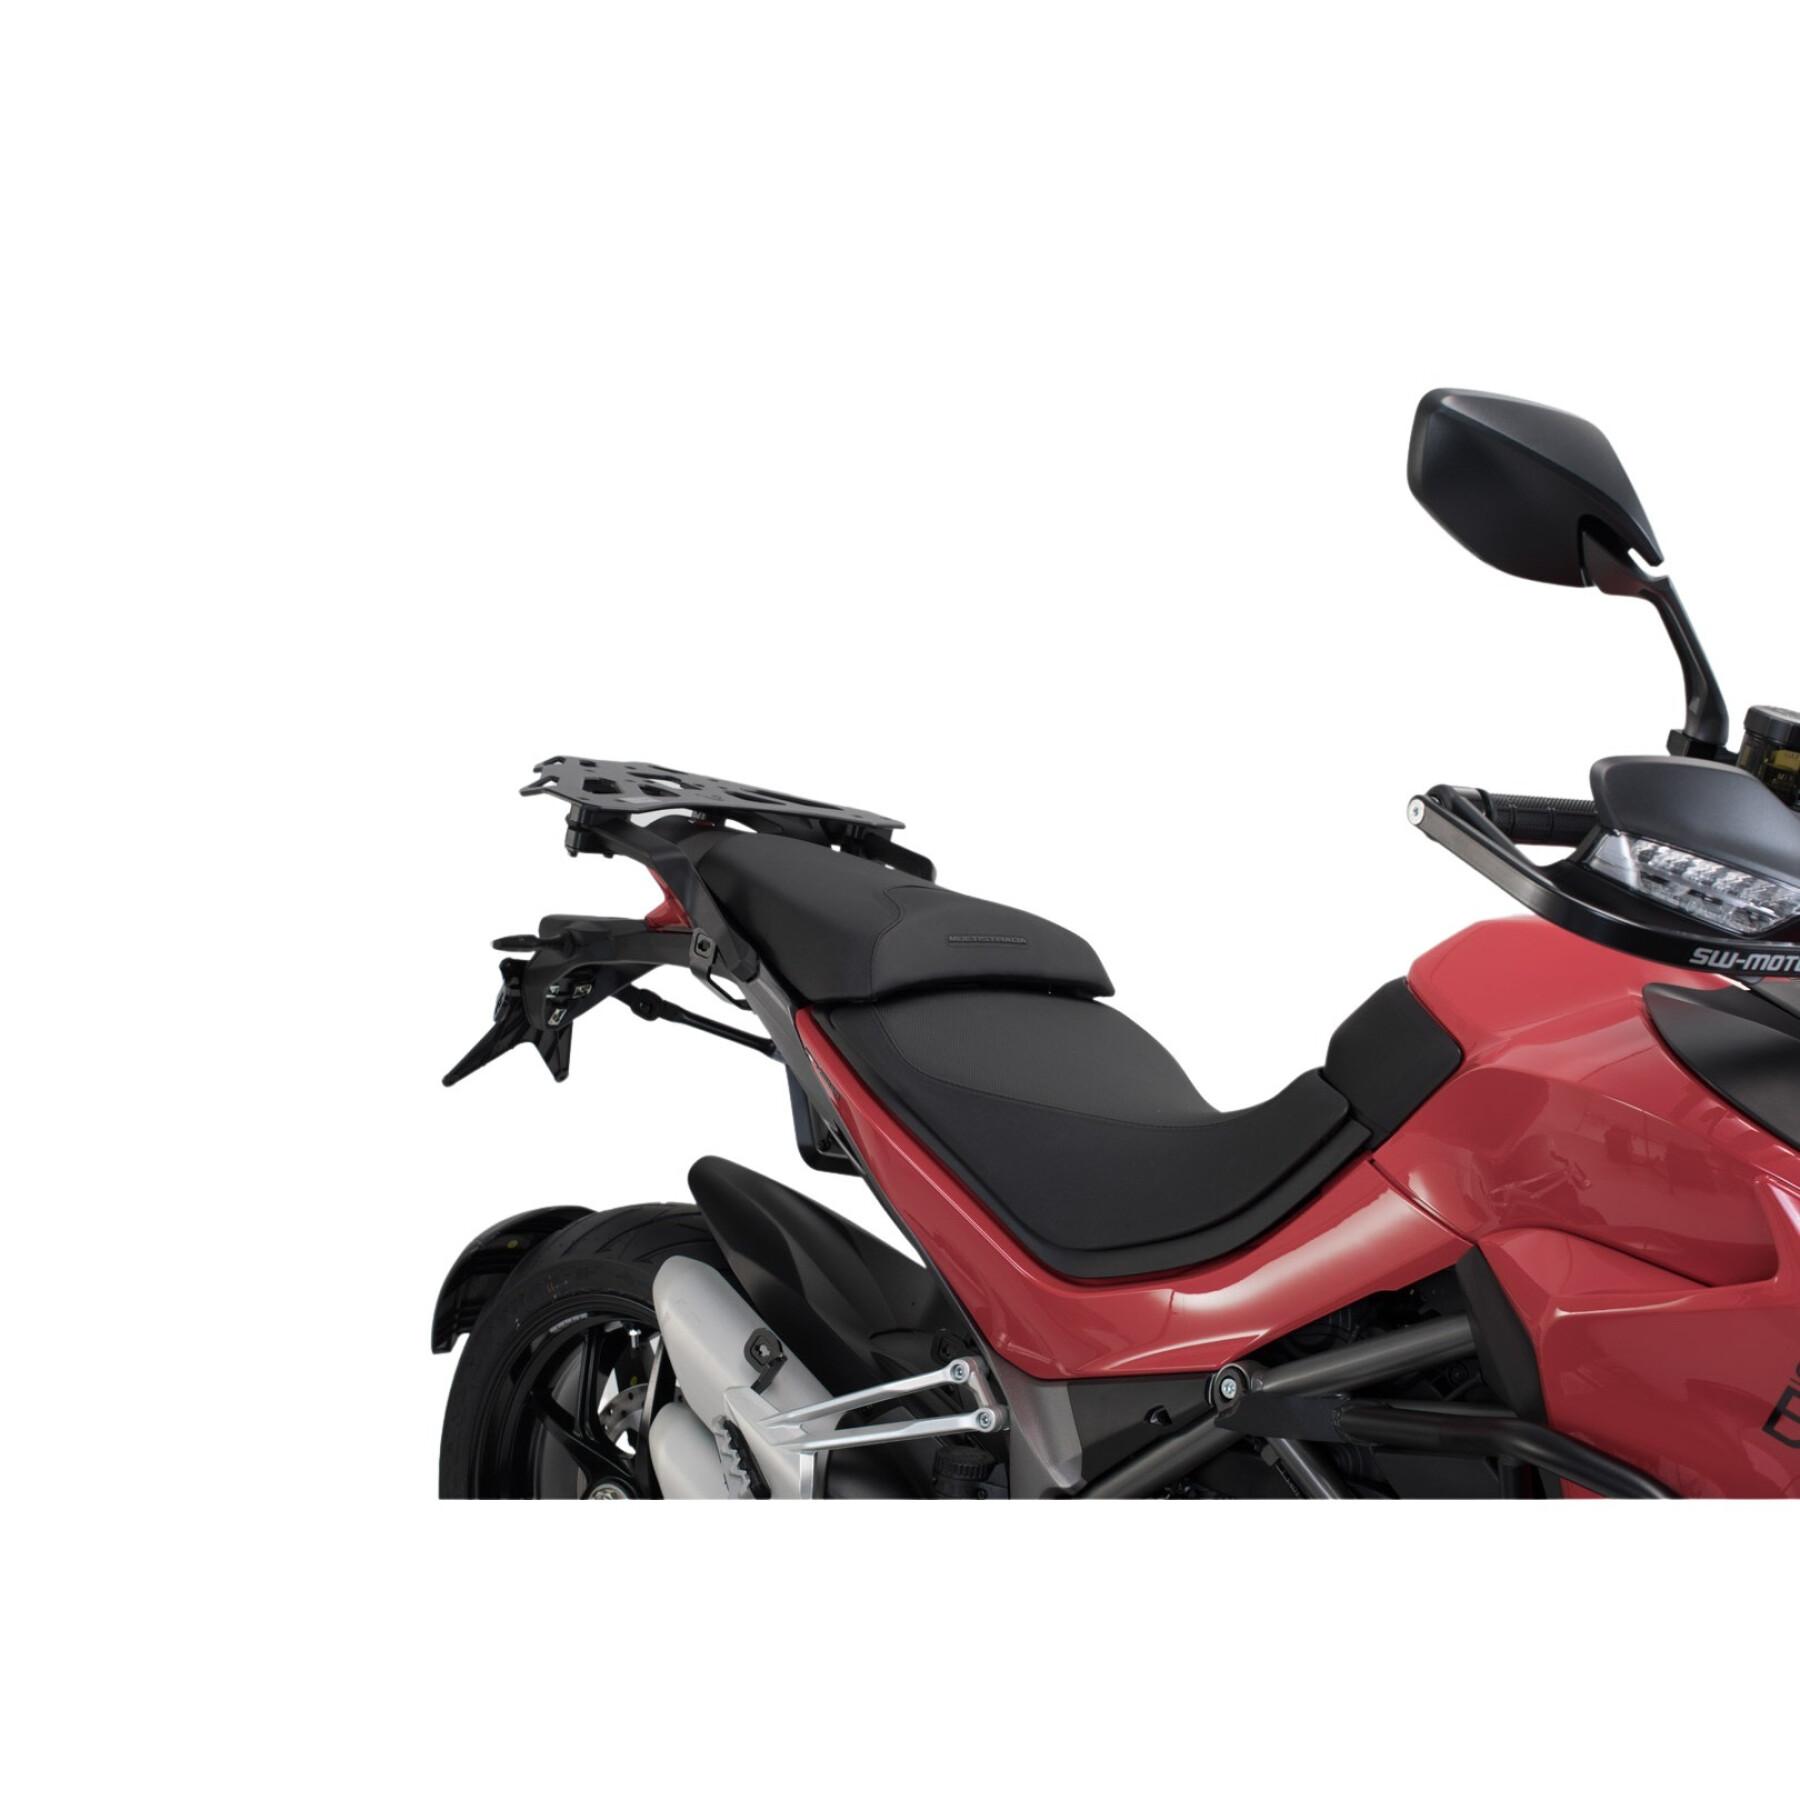 Support valises latérales moto Sw-Motech Pro. Ducati Multistrada 1260 (18-)